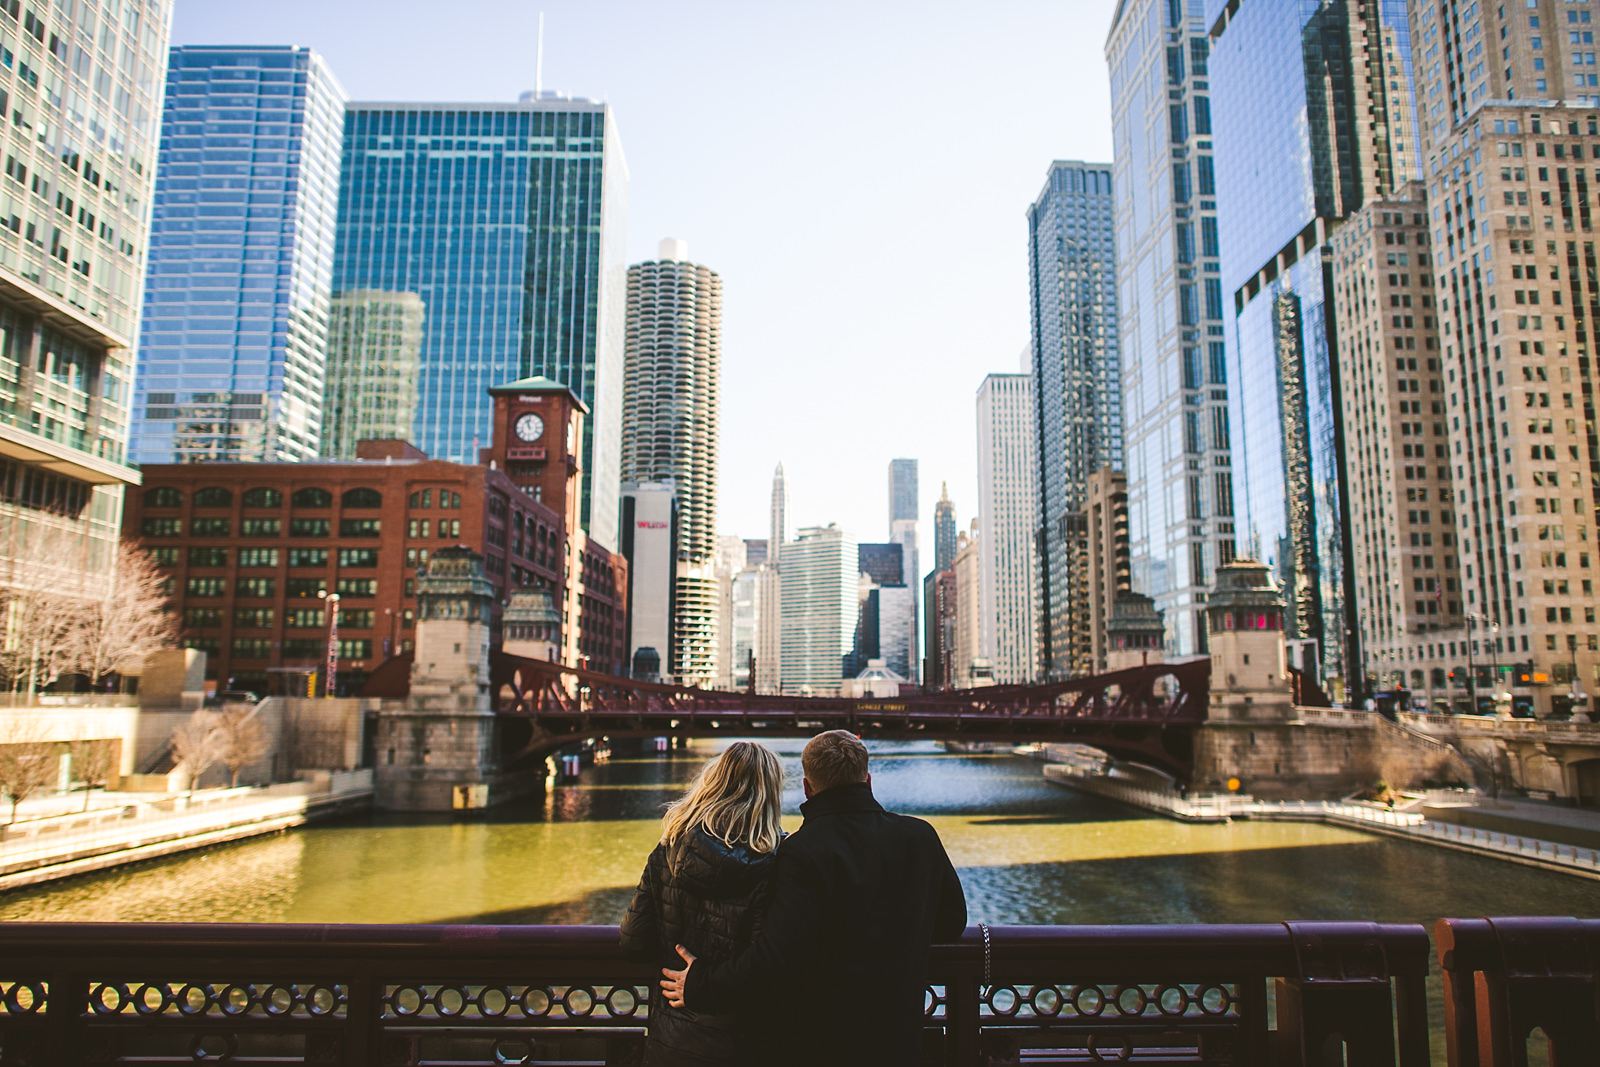 16 non boring engagement photographers - The Prefect Chicago Proposal // Eva + Vitalij